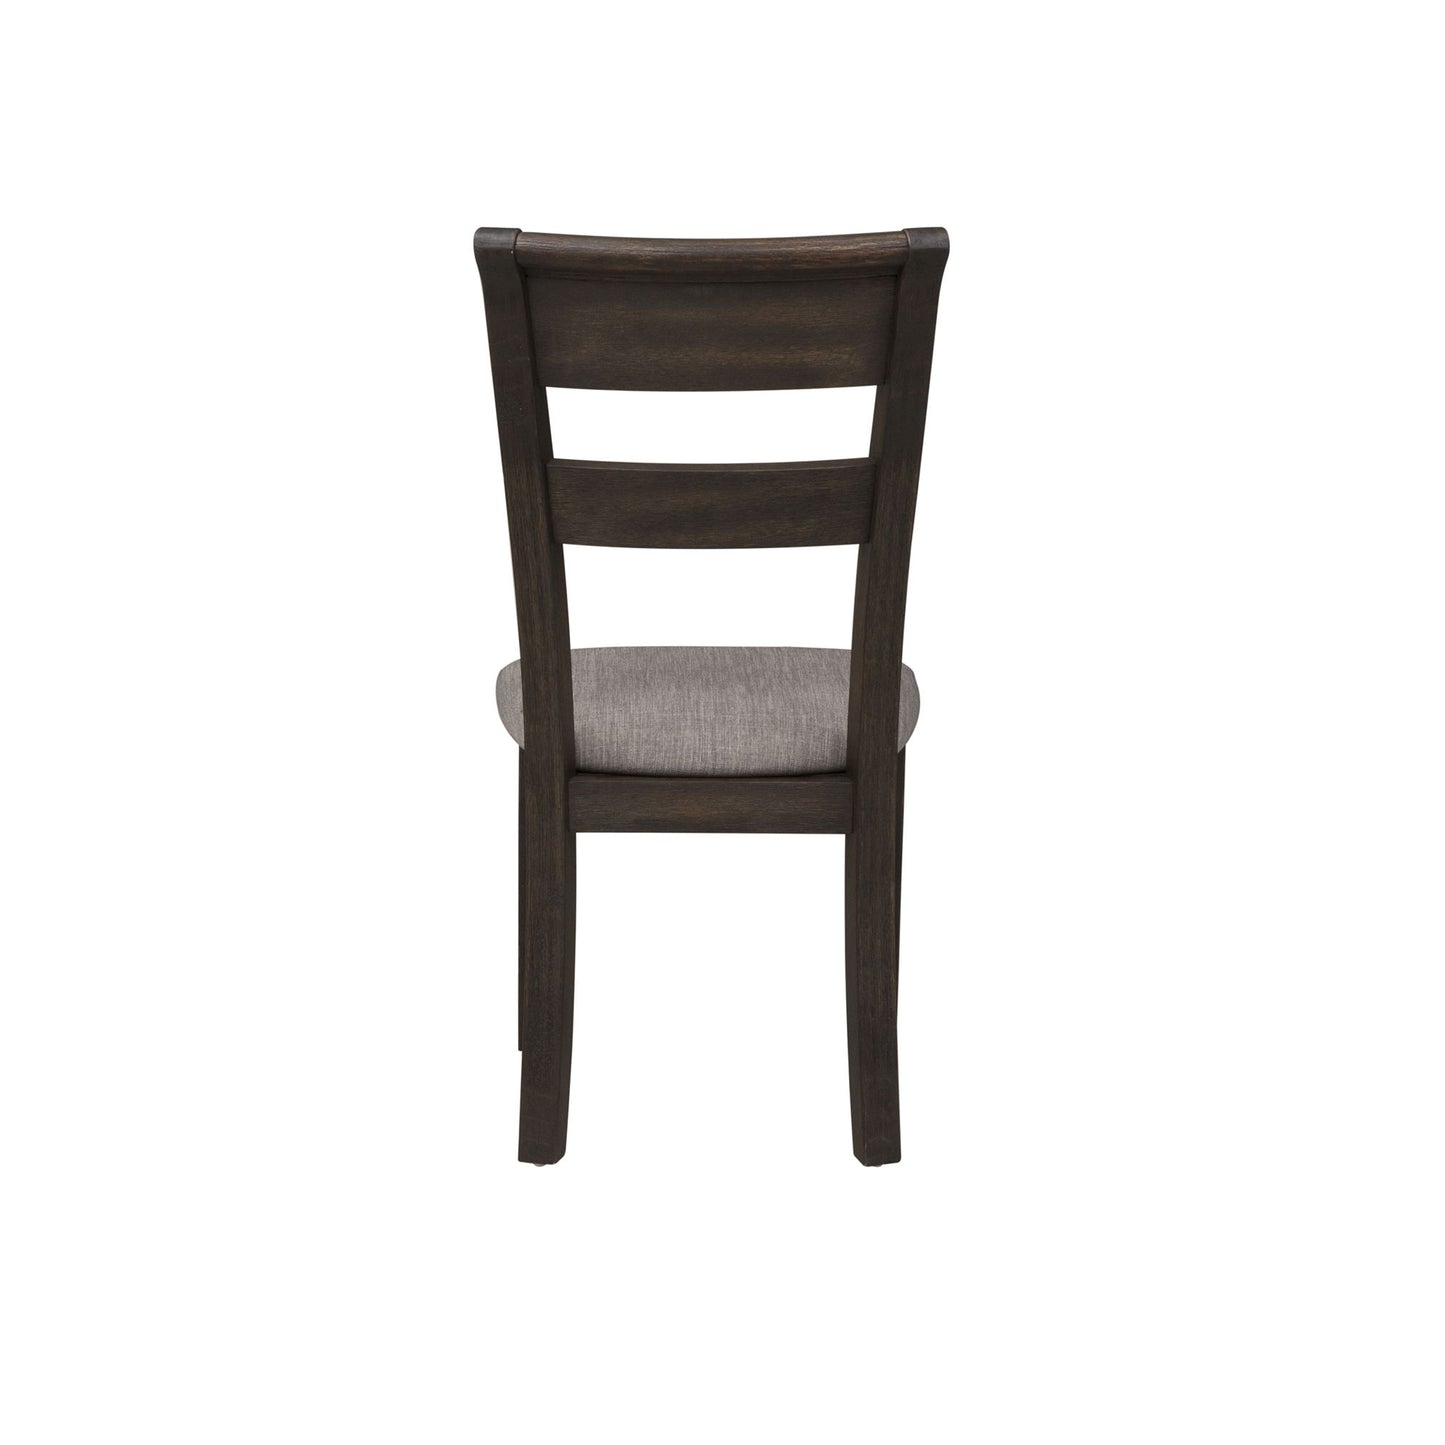 Double Bridge - Splat Back Side Chair - Dark Brown